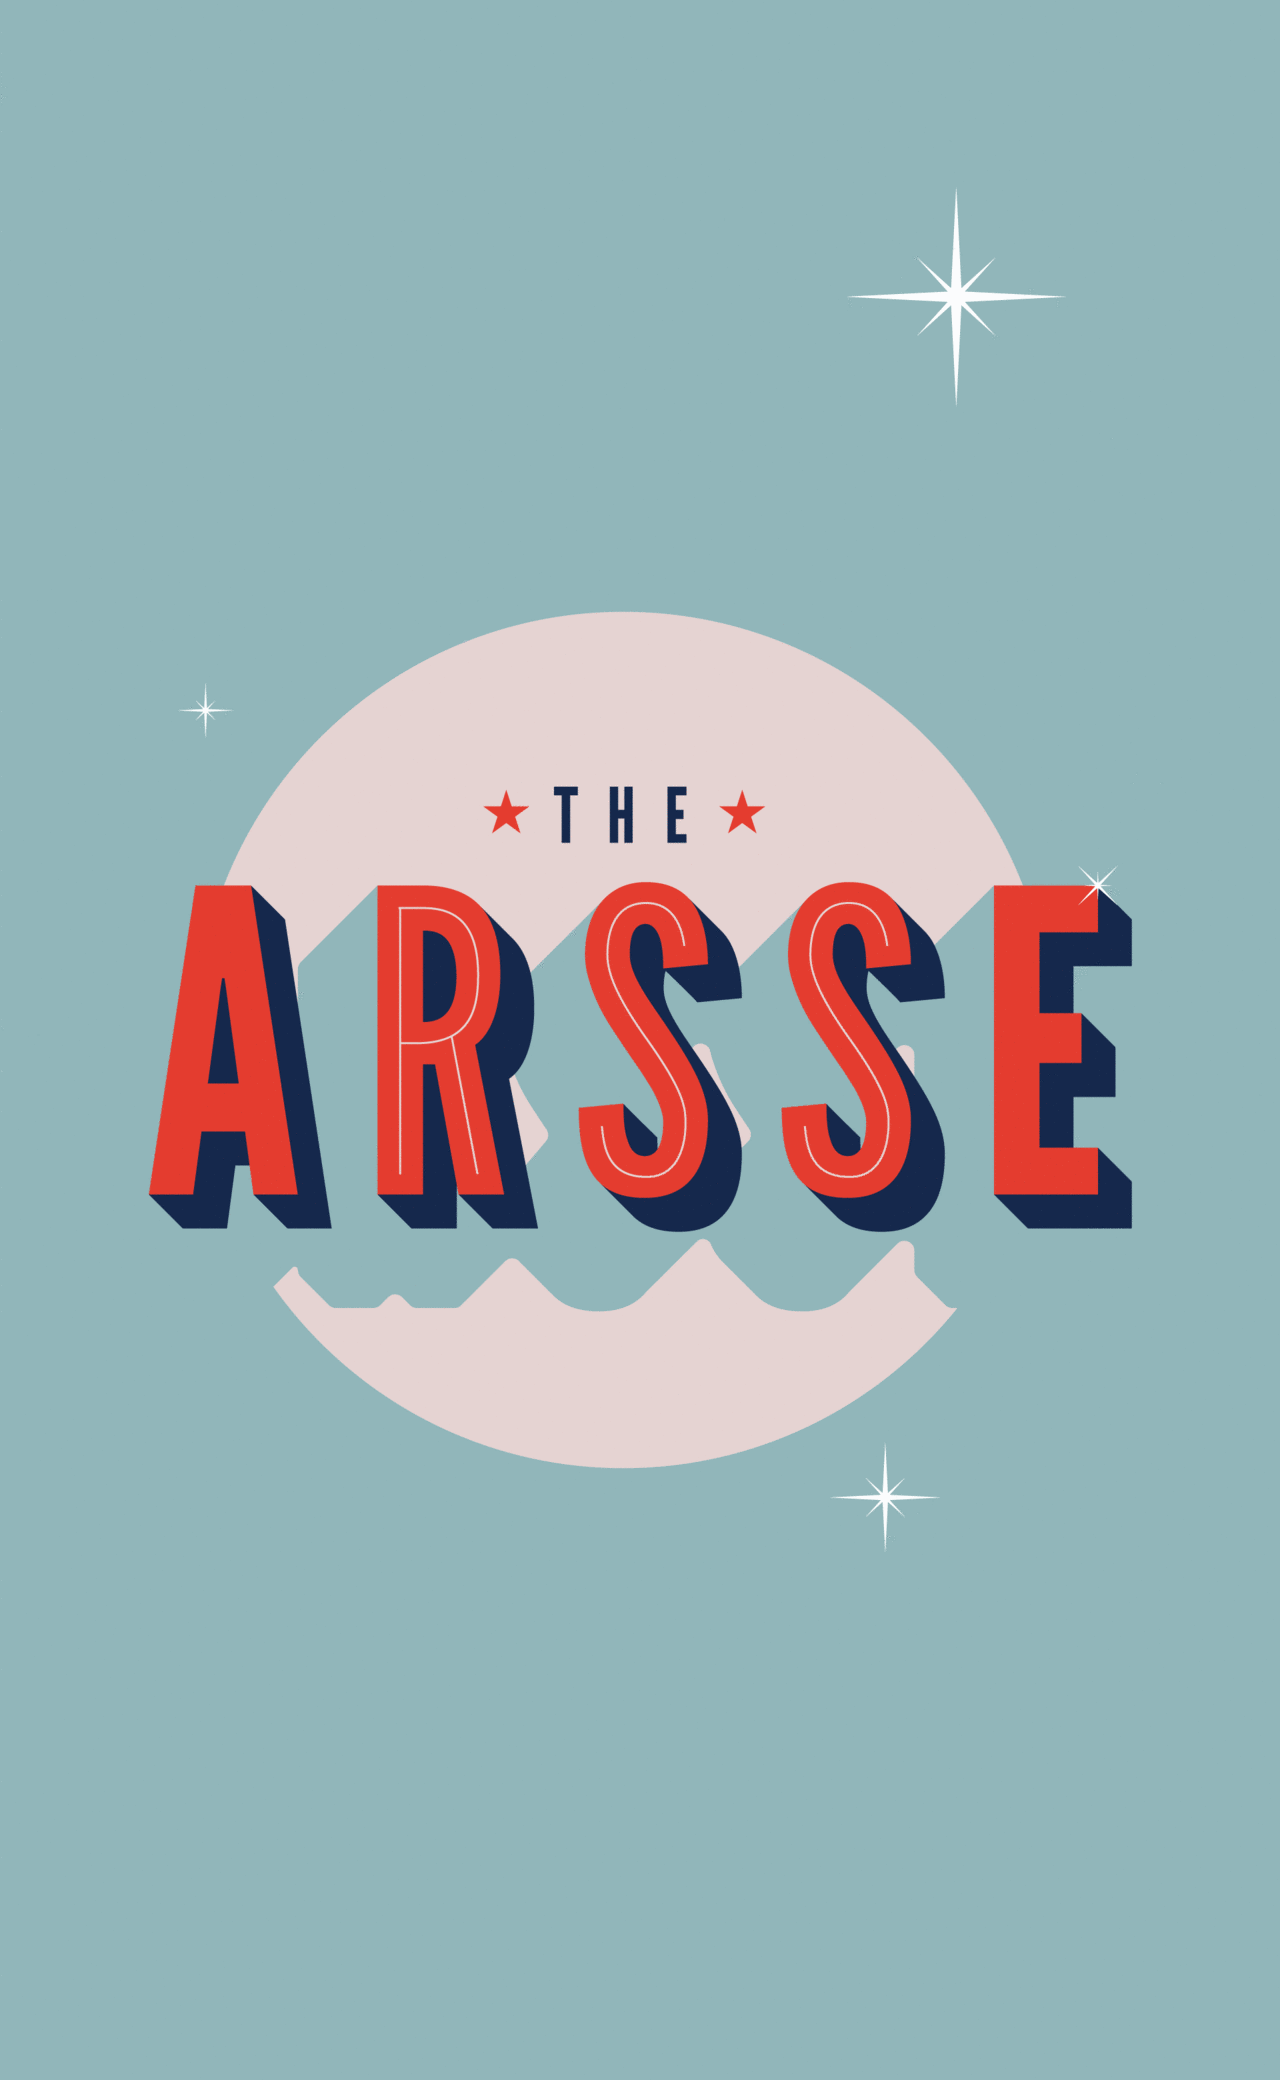 The Arsse's logo